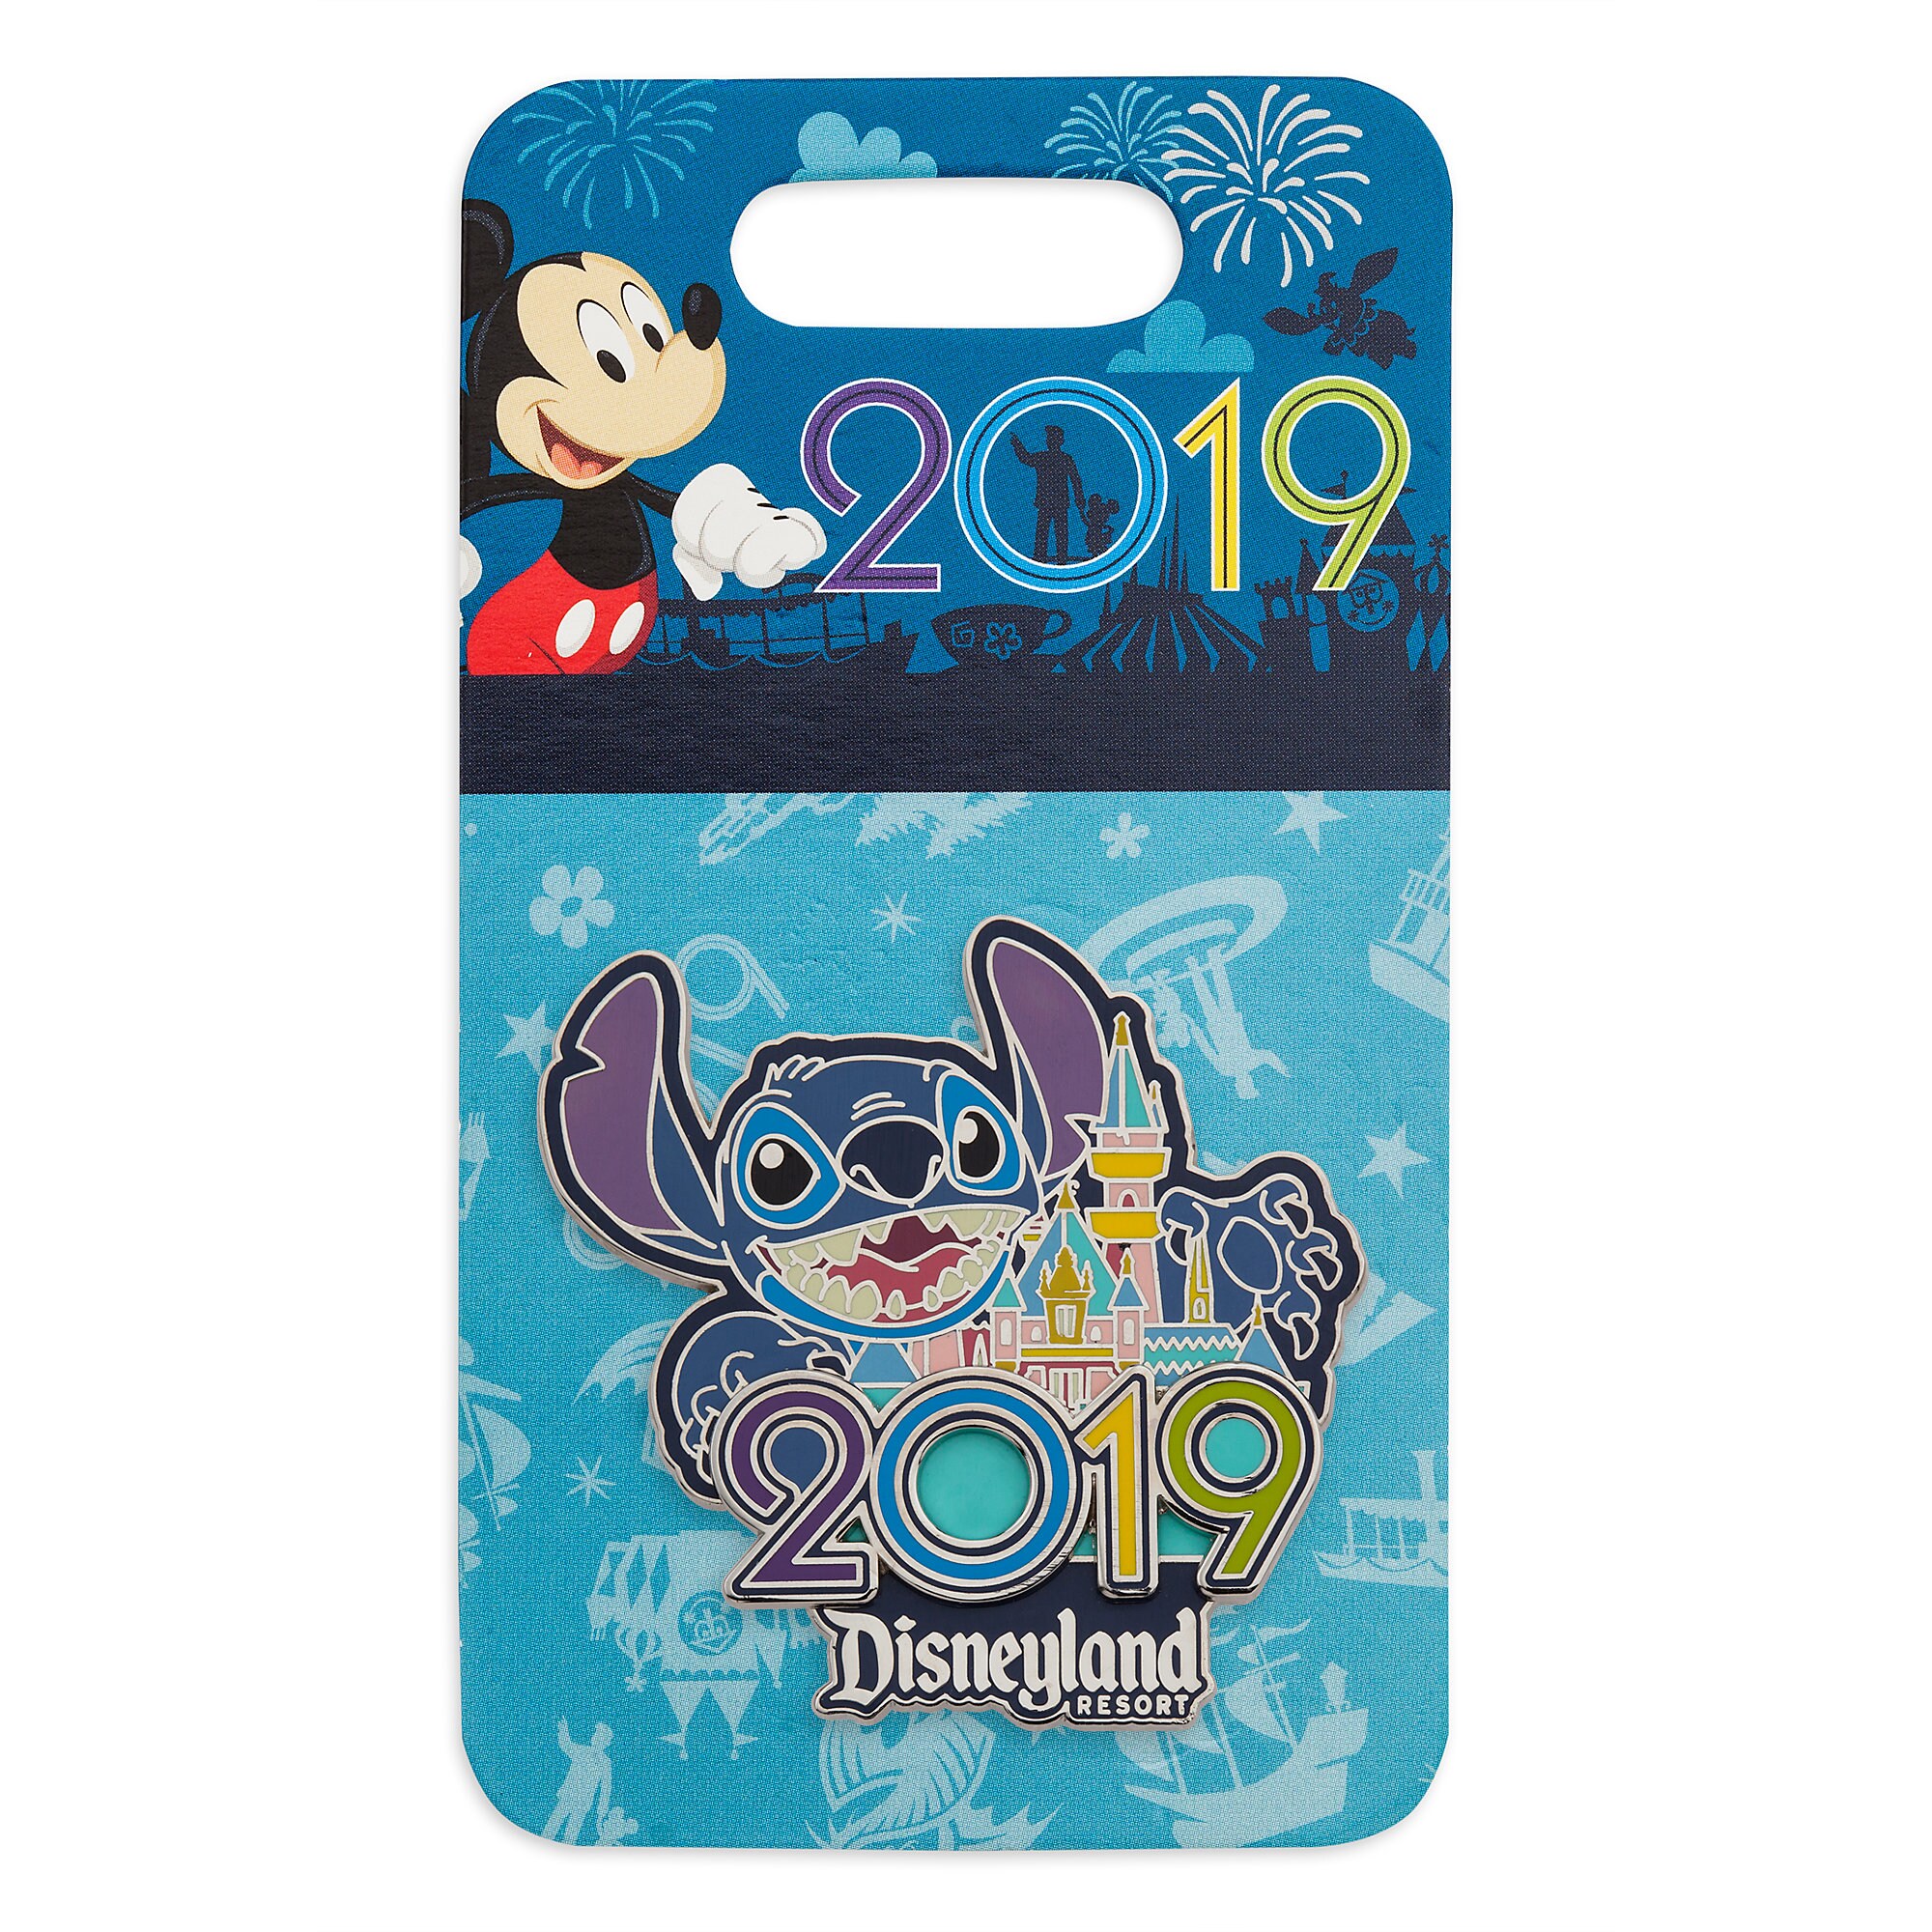 Stitch Pin - Disneyland 2019